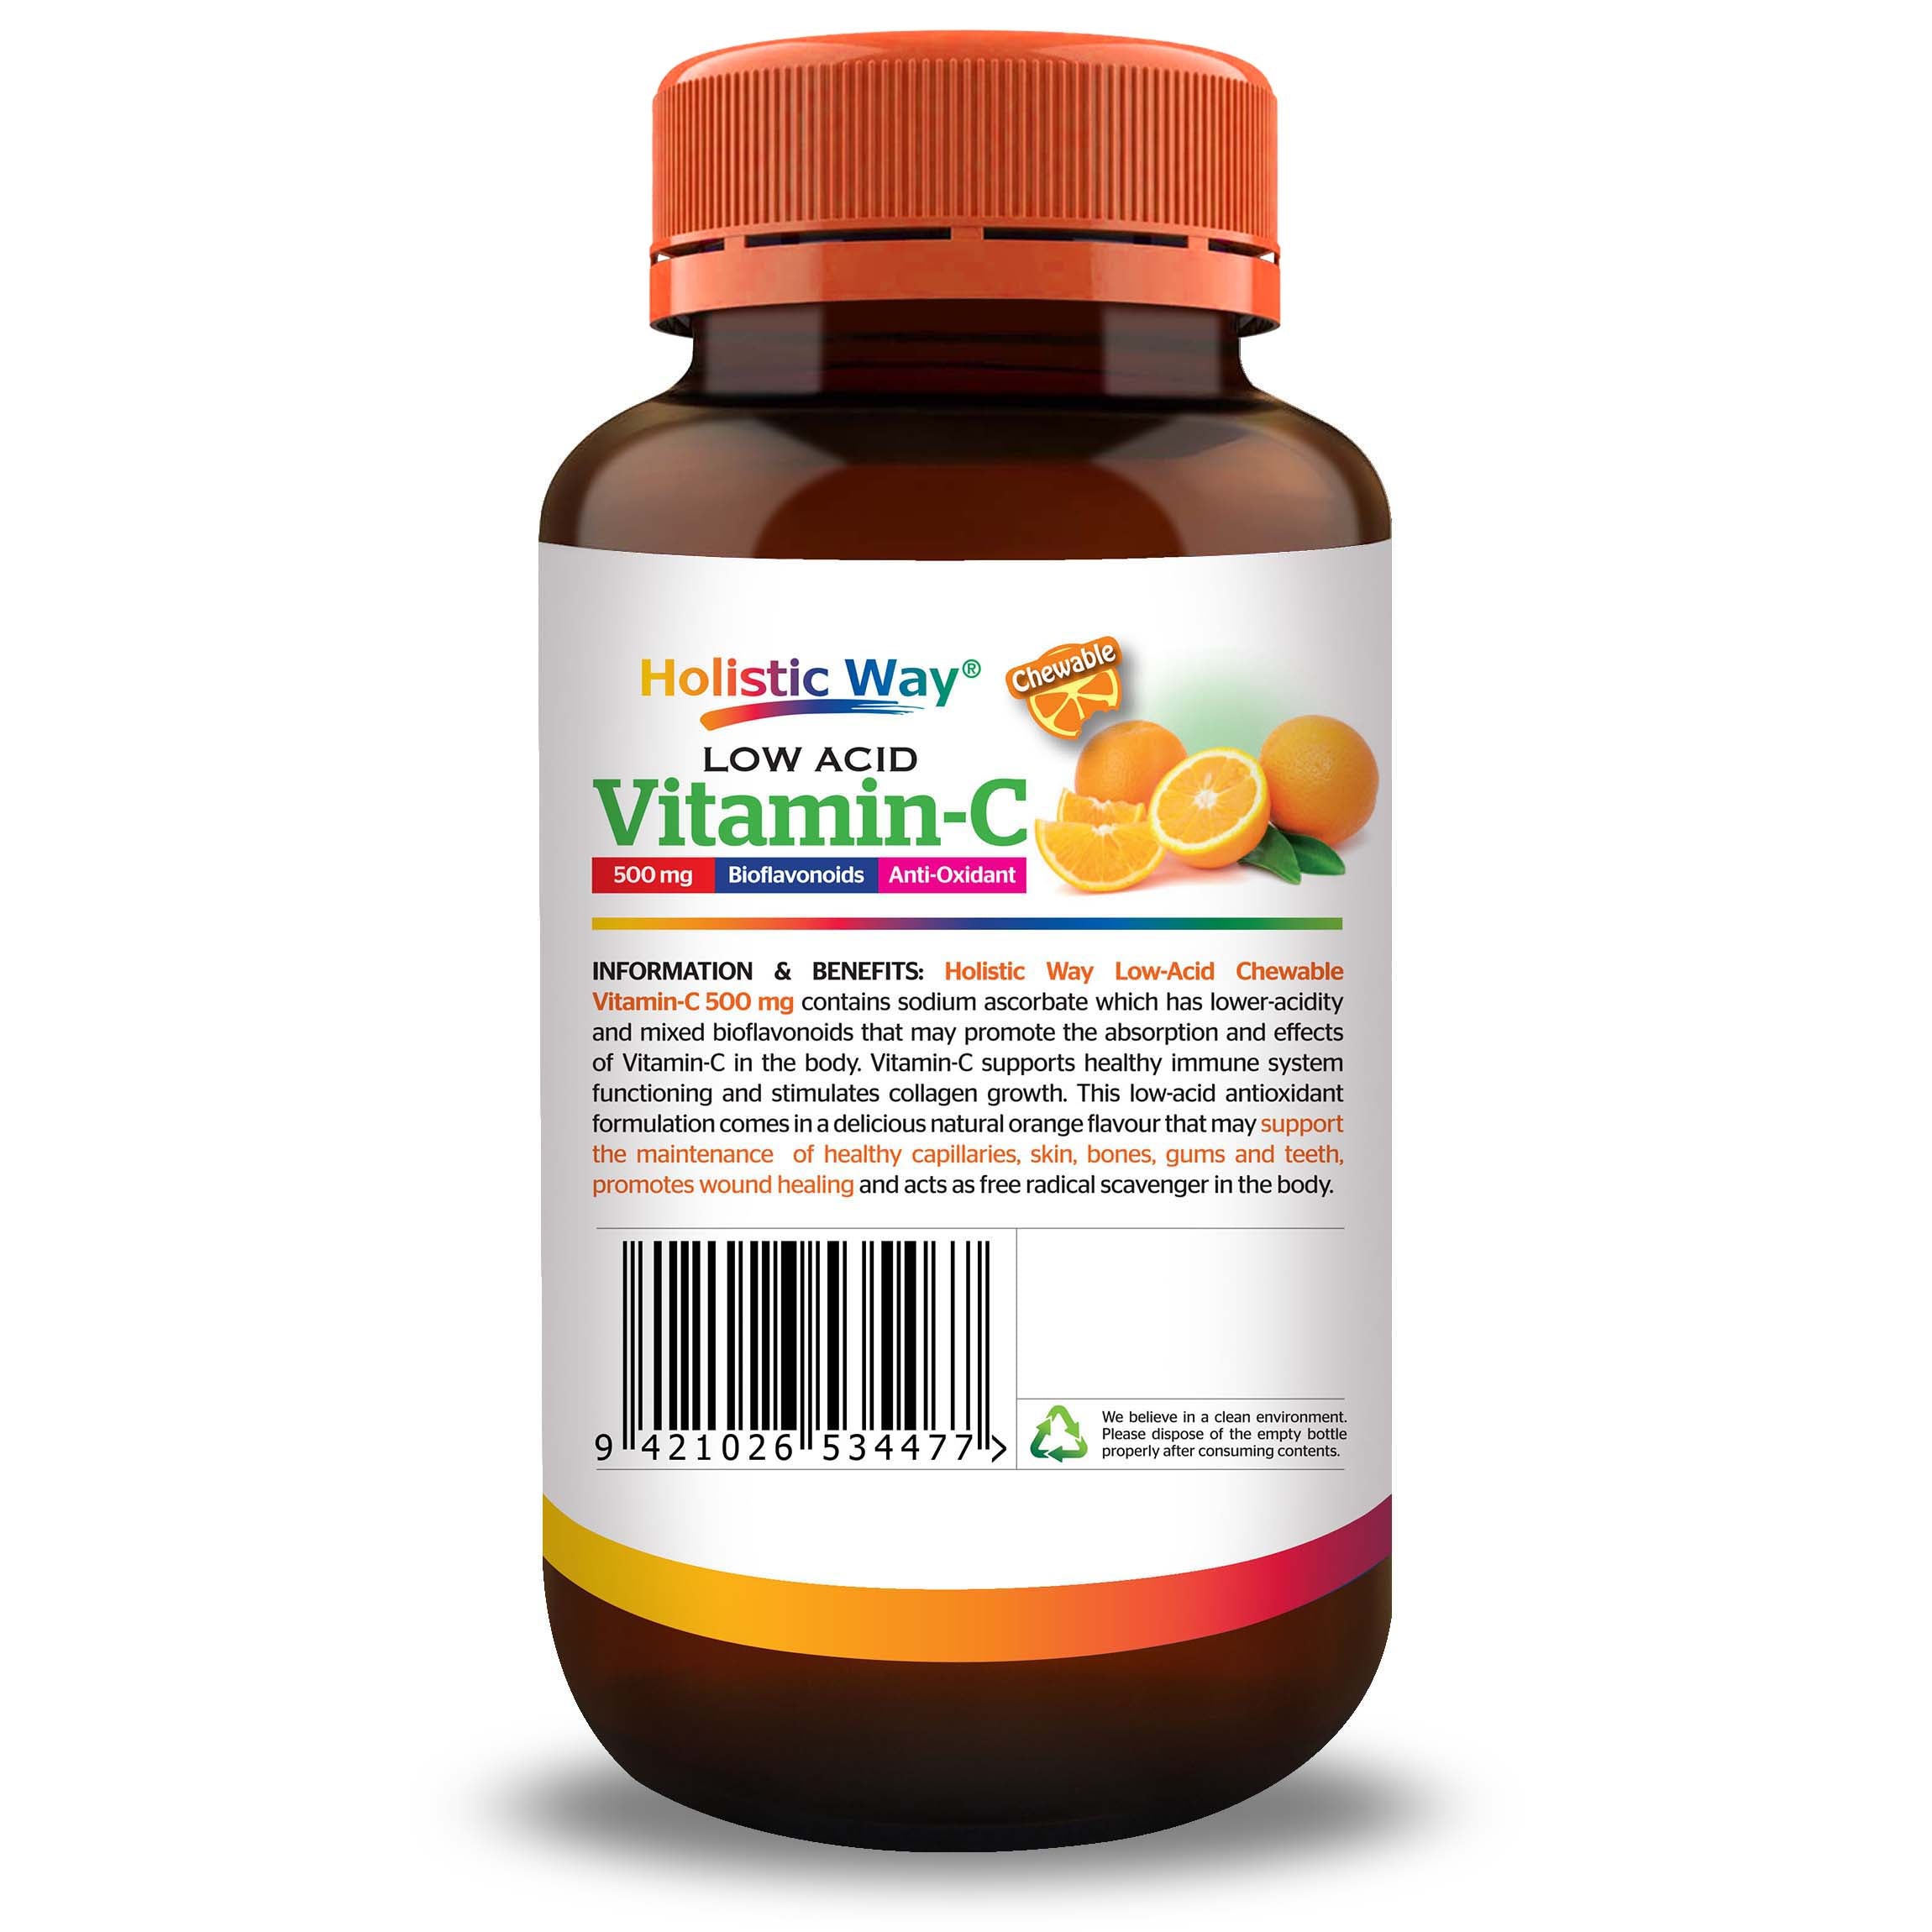 Holistic Way Chewable Vitamin-C 500mg (Low-Acid) (50 Tablets)